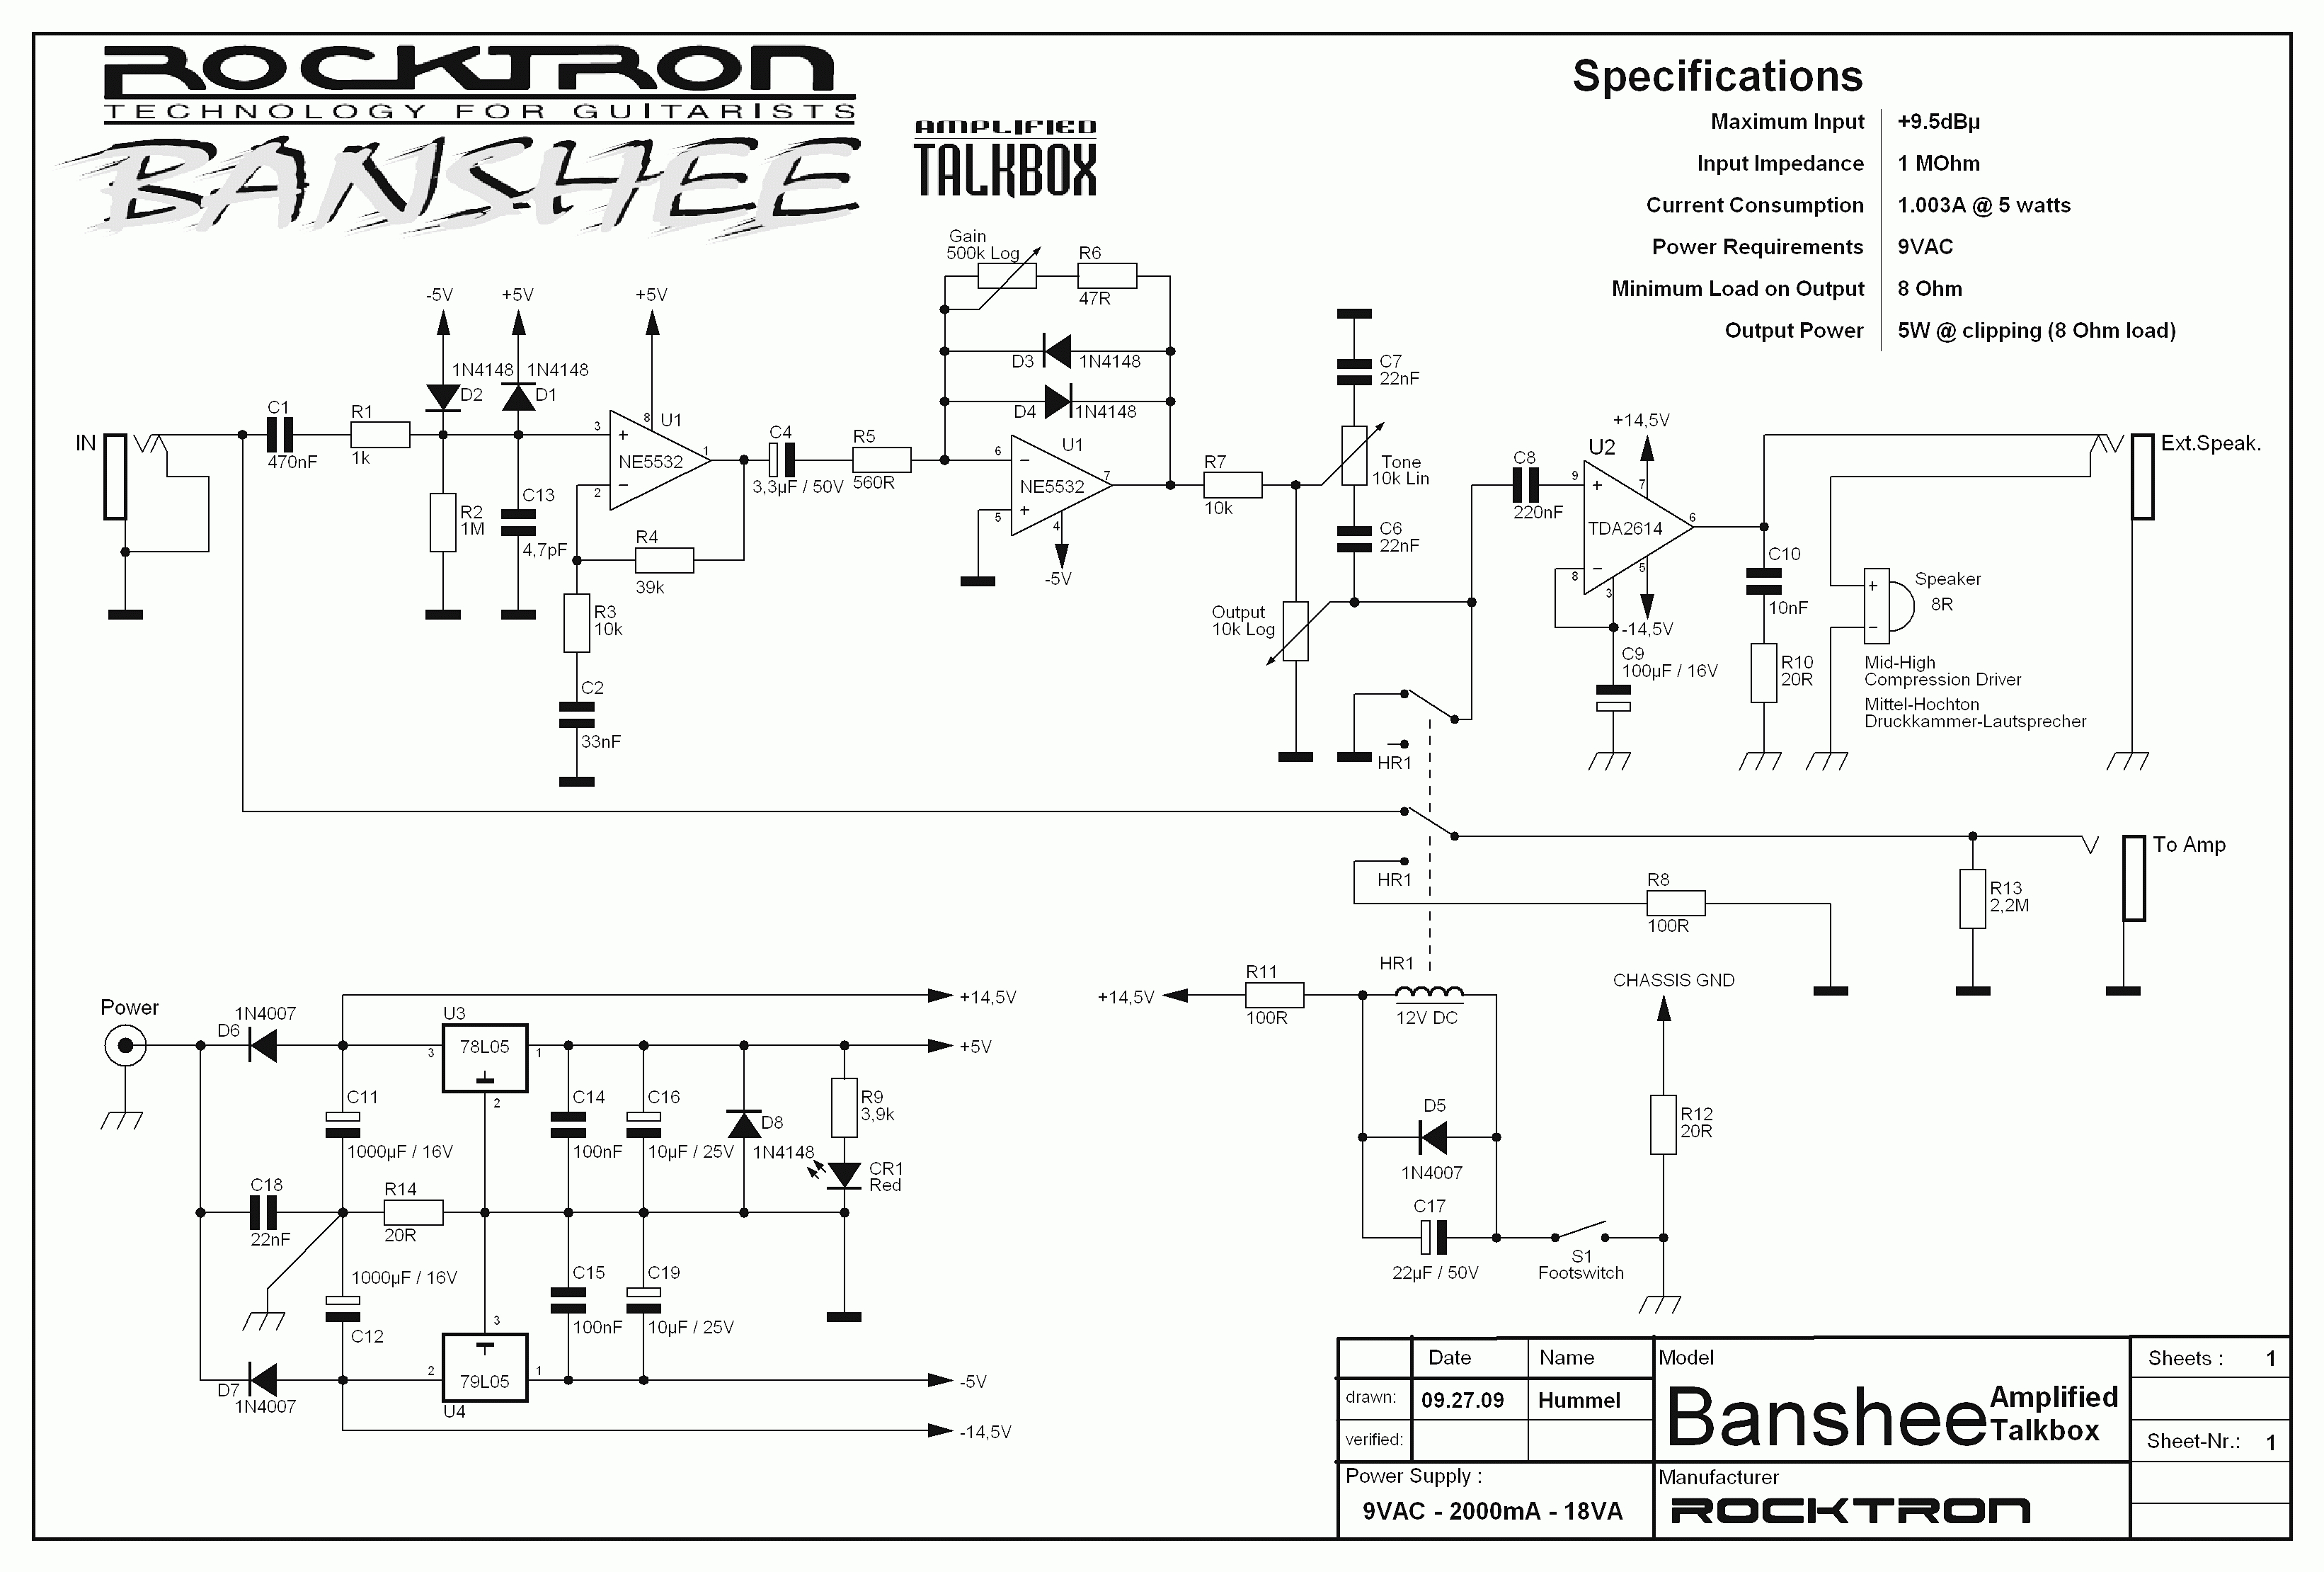 5 Pin Cdi Box Wiring Diagram Inspirational Banshee 20 4 - 5 Pin Cdi Box Wiring Diagram